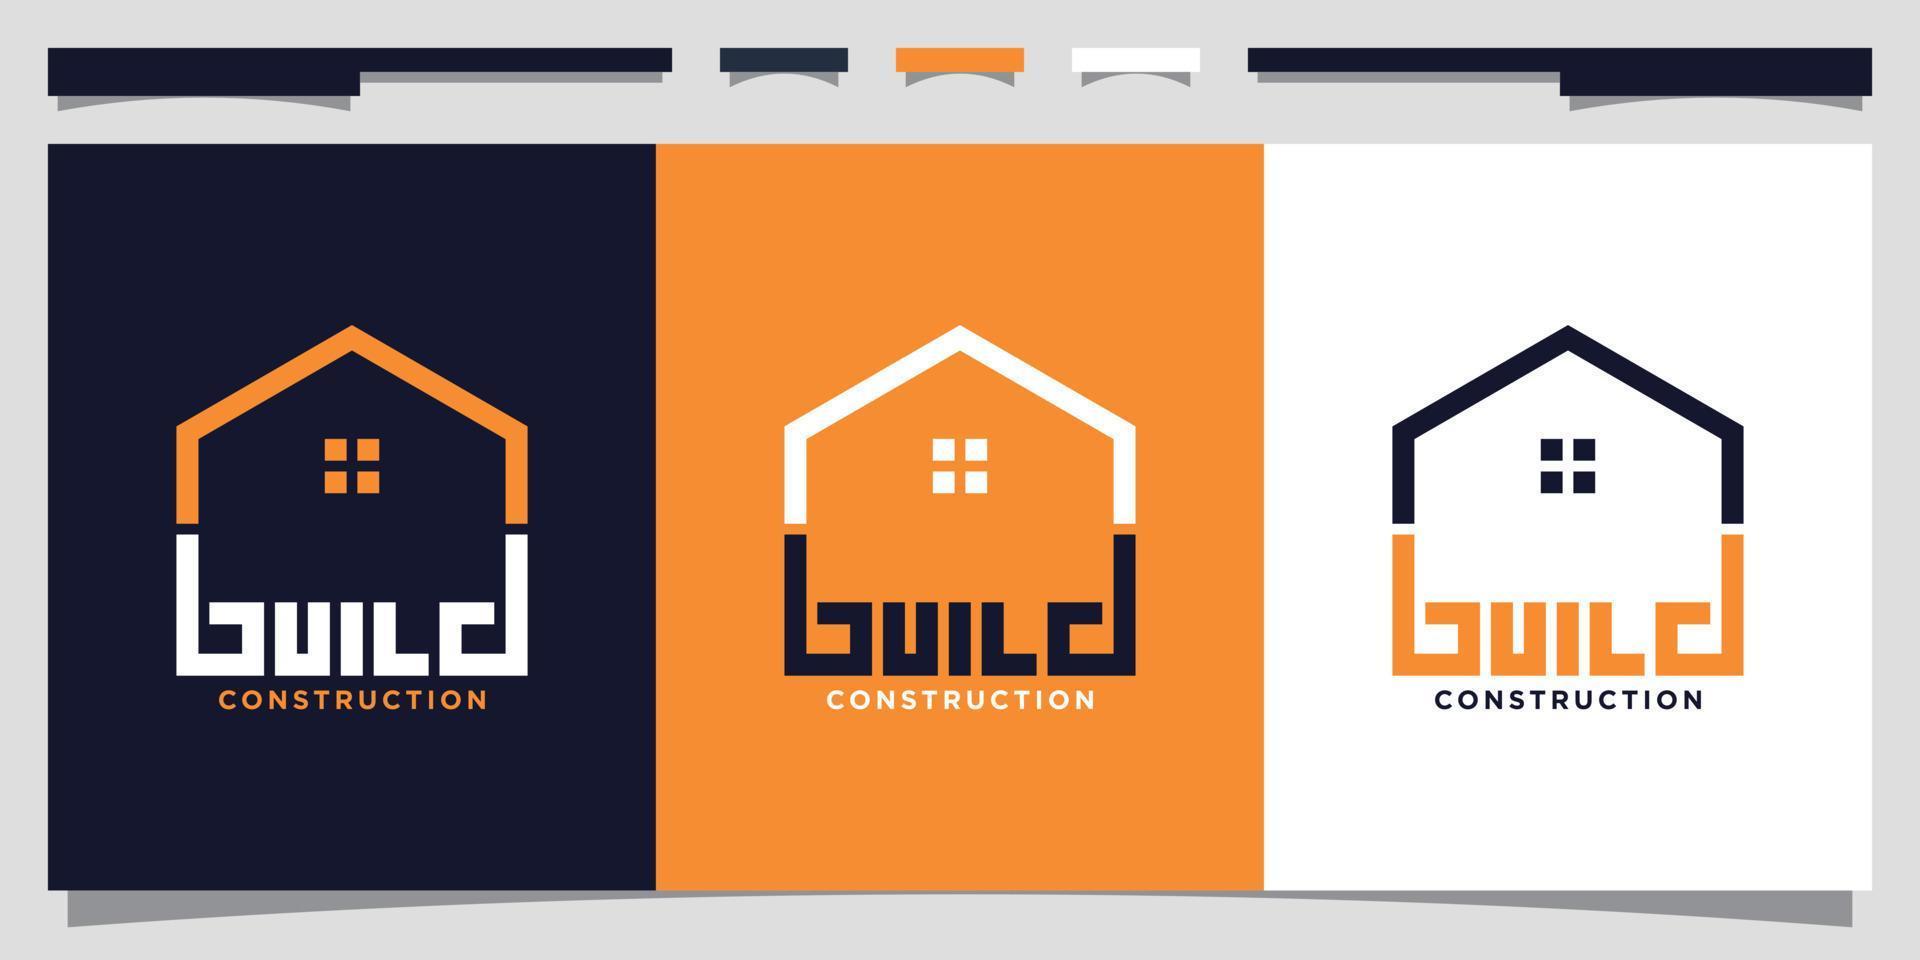 Building construction logo design template with line art style Premium Vector